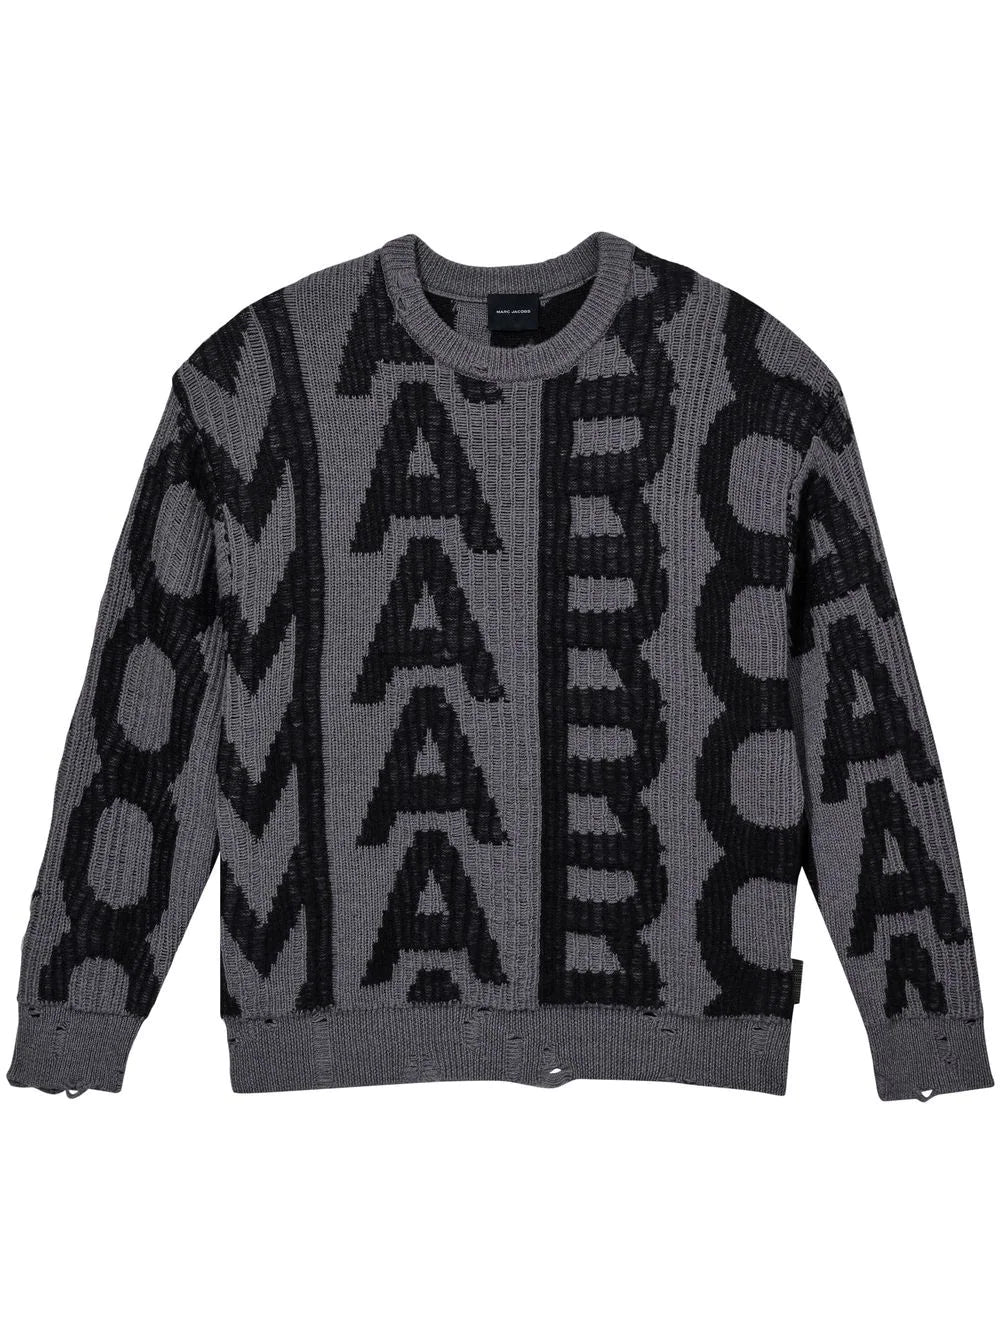 MARC JACOBS WOMEN Monogram Distressed Sweater Black/Charcoal - MAISONDEFASHION.COM